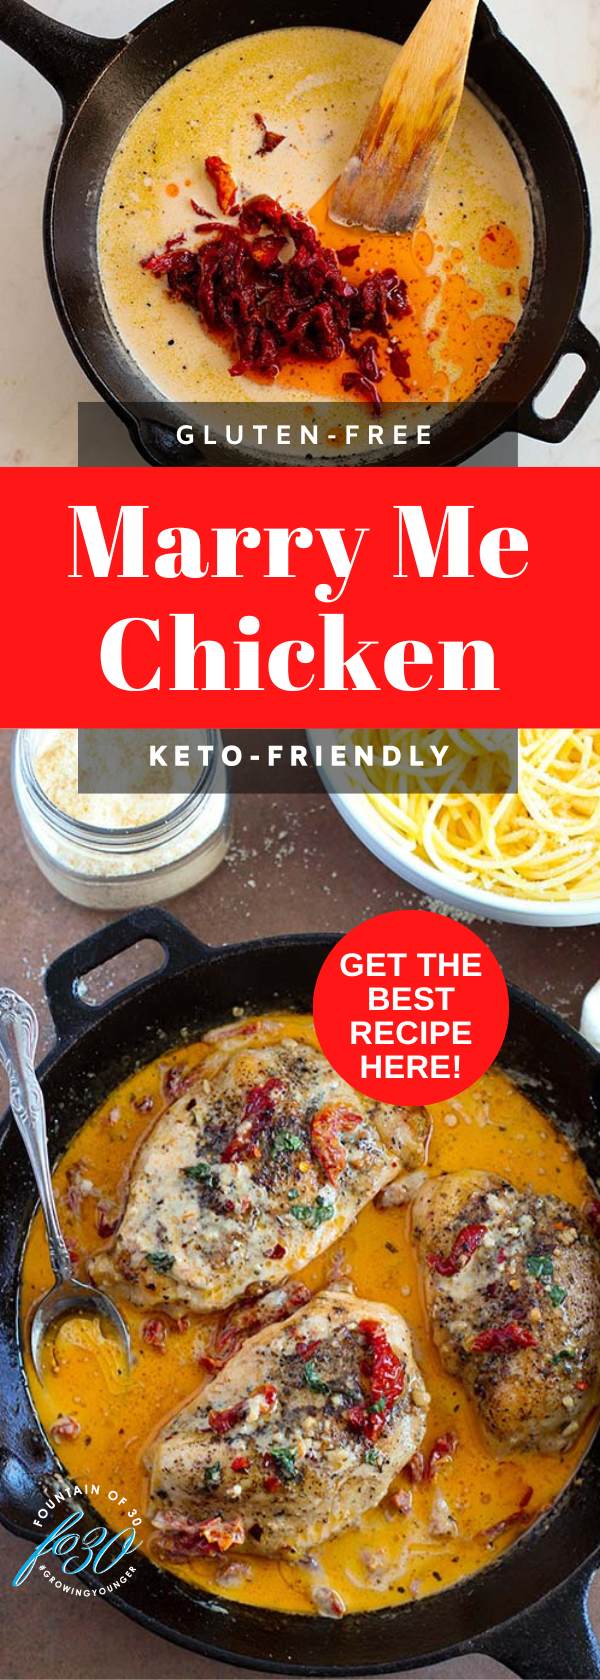 the best marry me chicken recipe fountainof30